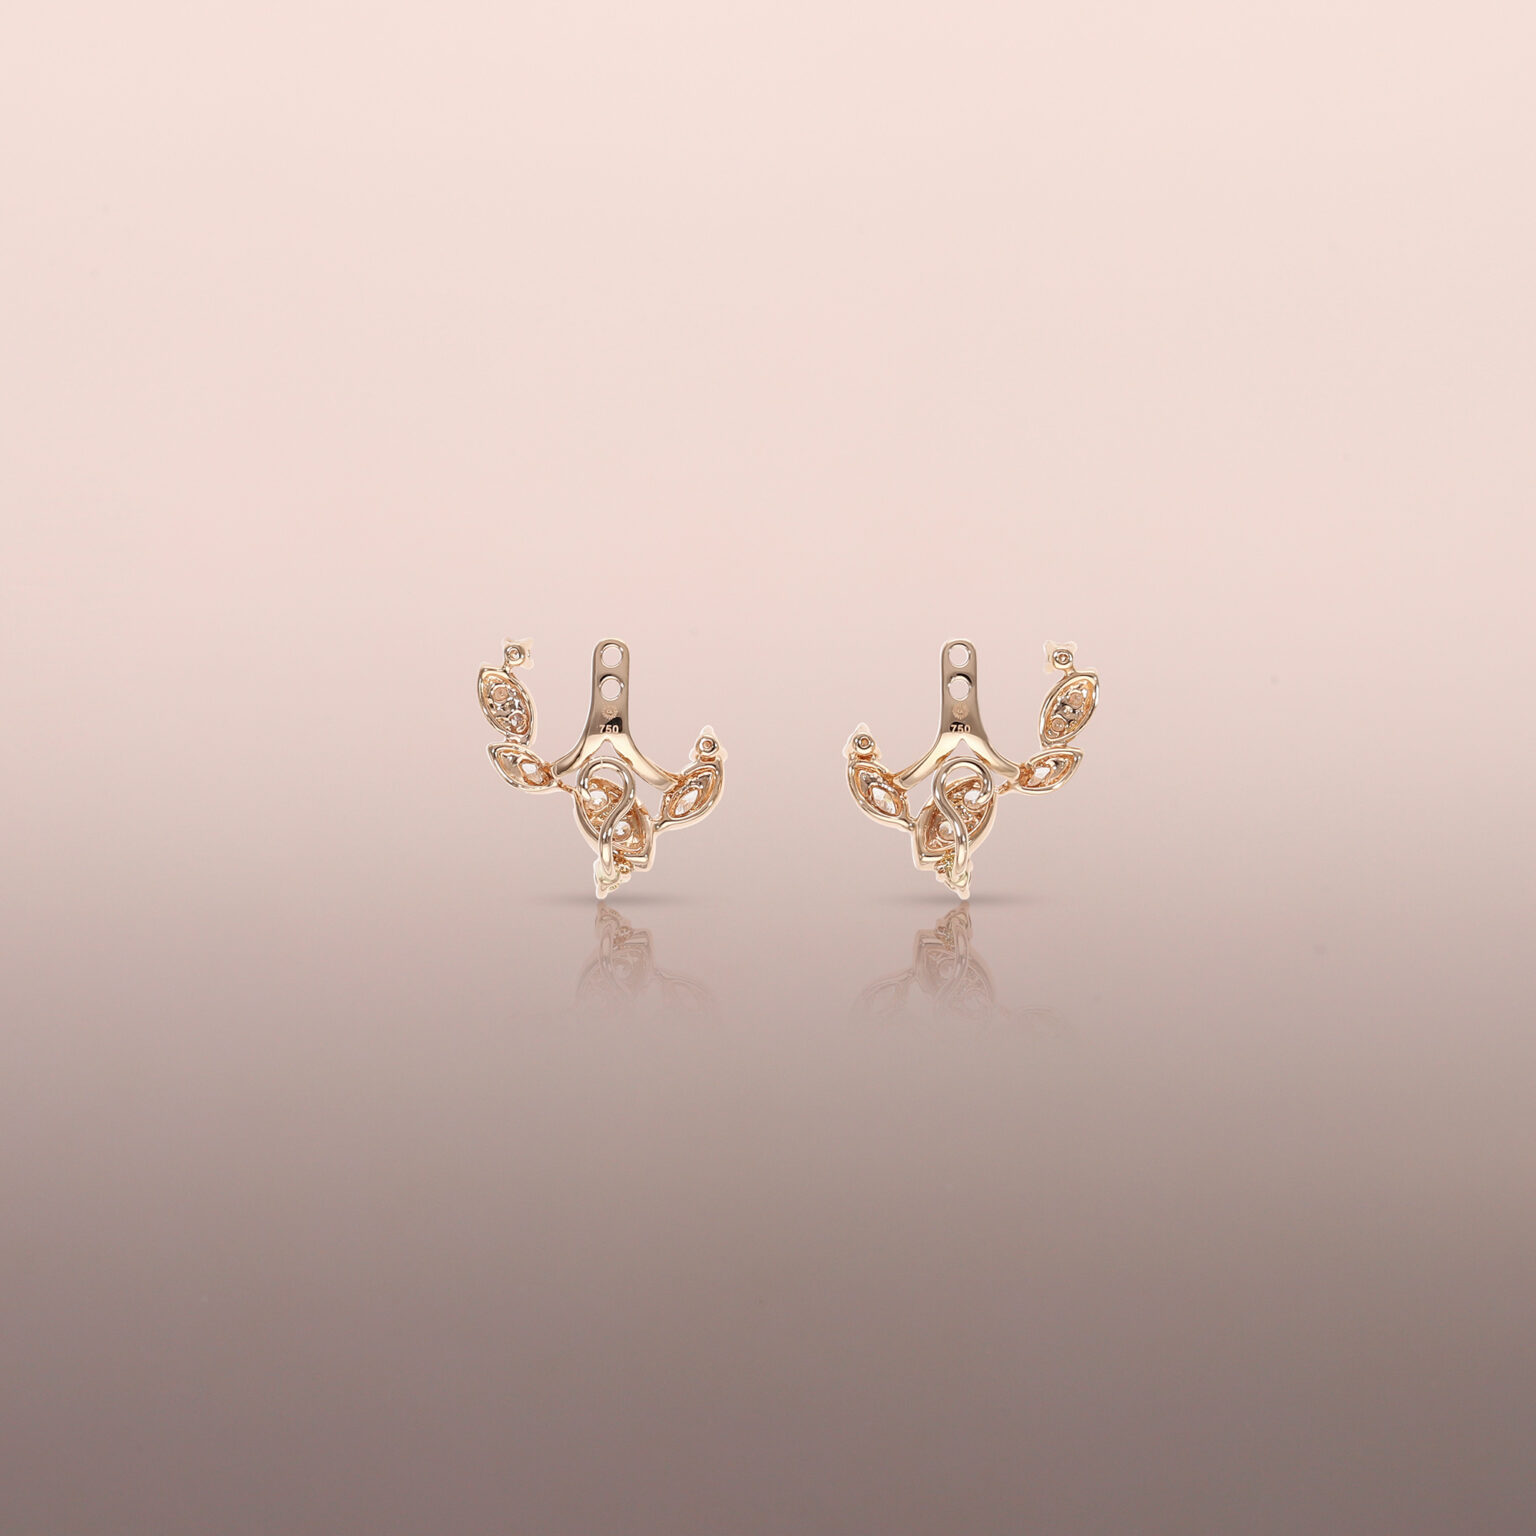 Rose gold diamond earring jackets